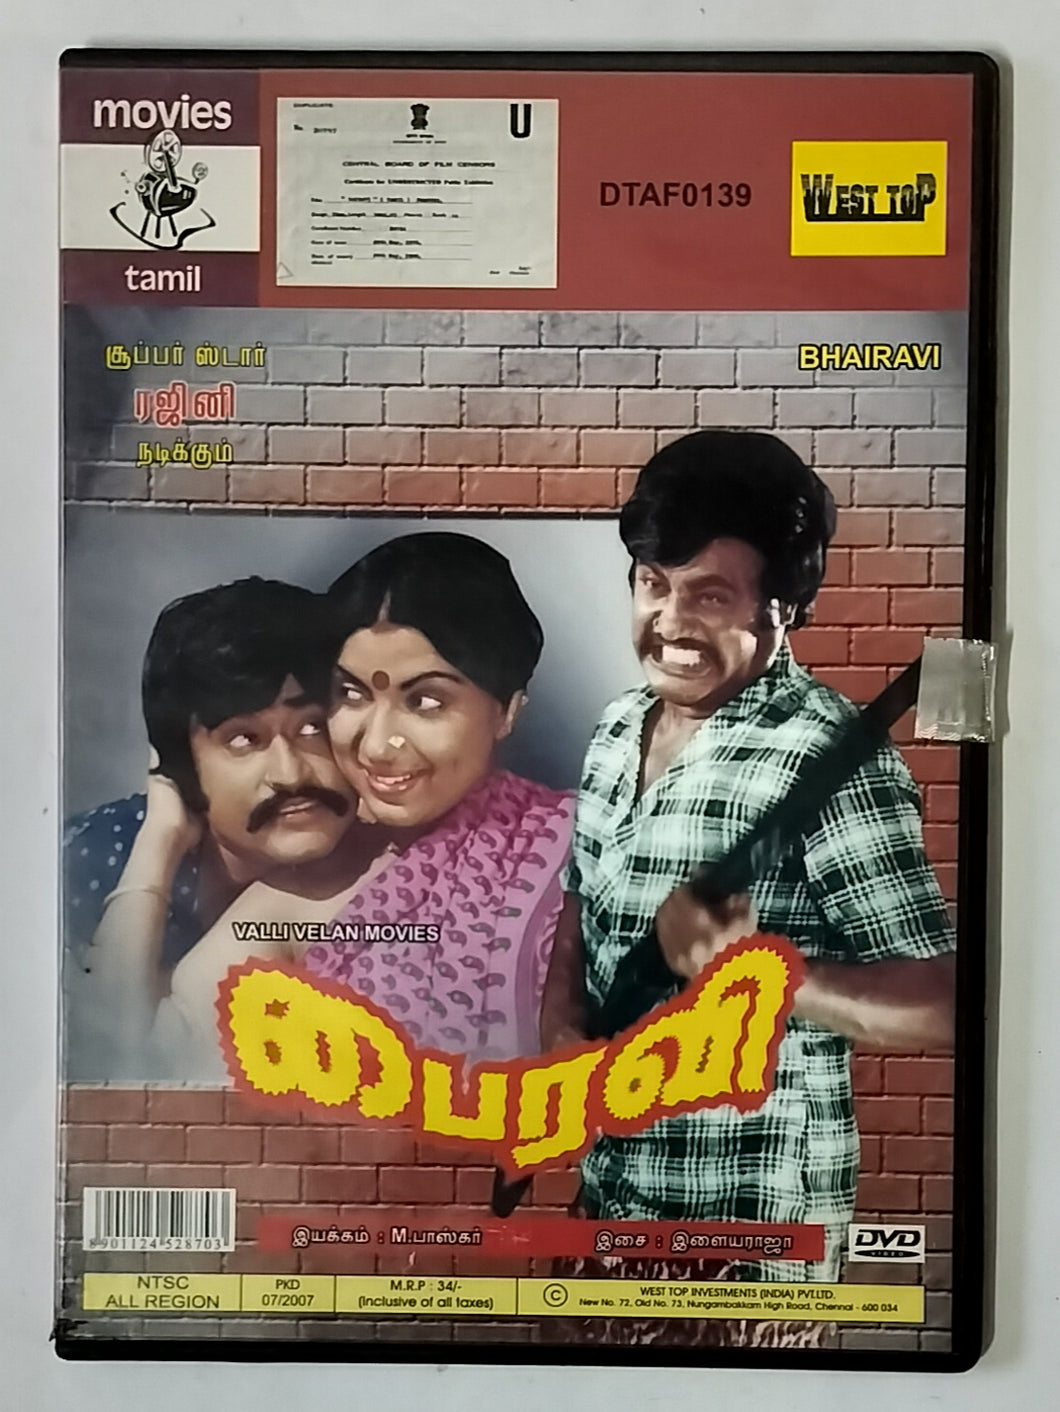 Bhairavi - Tamil Movies ( DVD Video )